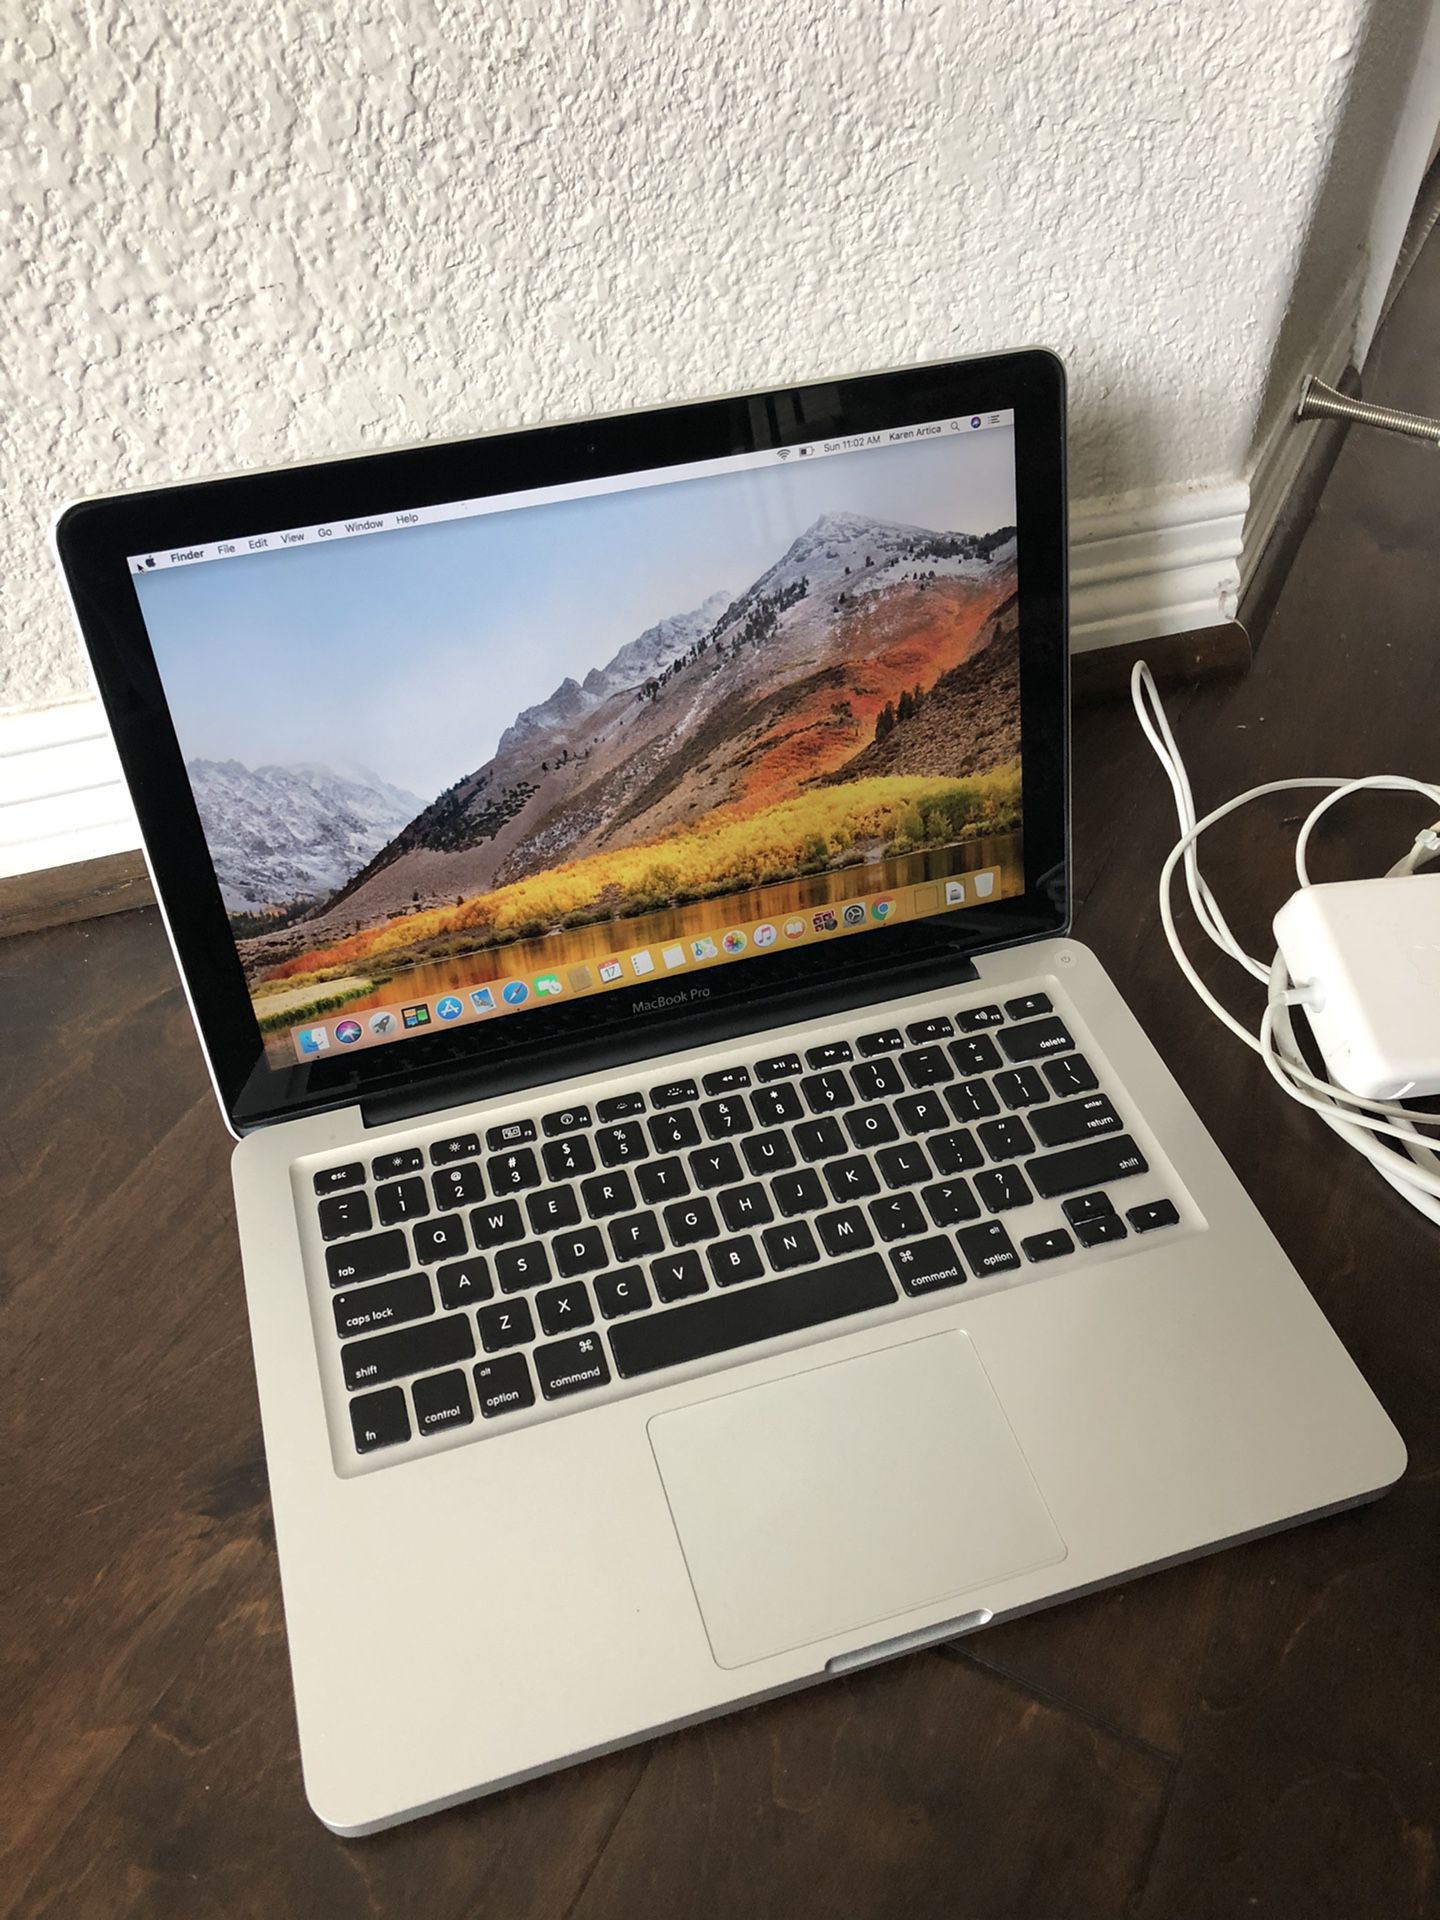 MacBook Pro 13” A1278 Intel core i5 2.3Ghz 4GB 250GB SATA HD WiFi iSight Camera OSX High sierra